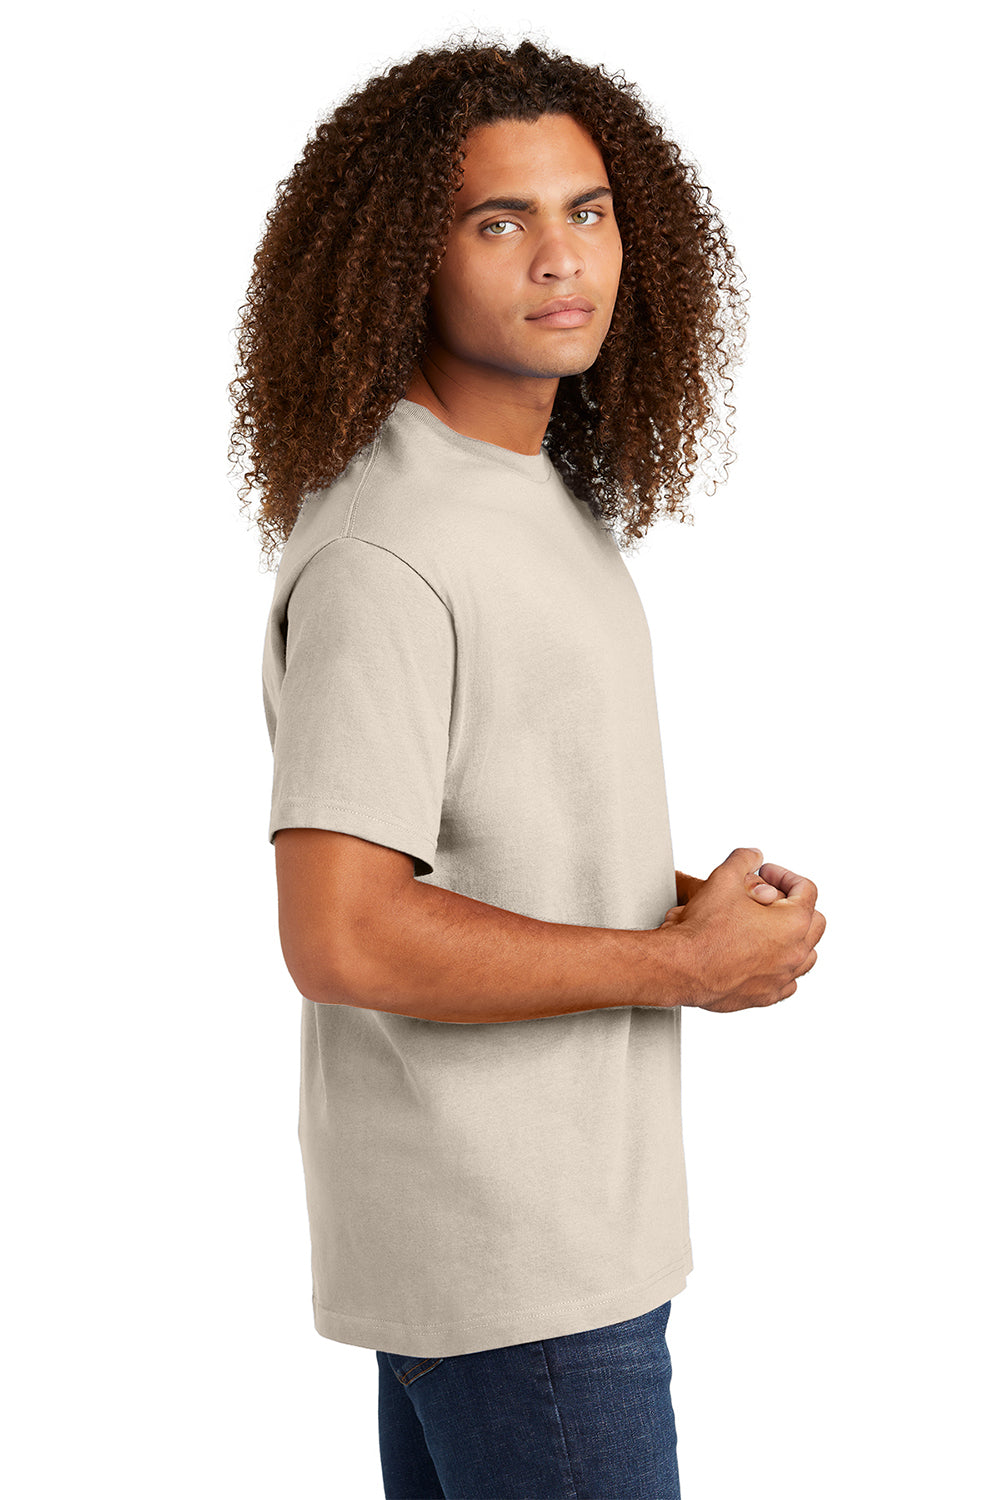 American Apparel 1301/AL1301 Mens Short Sleeve Crewneck T-Shirt Cream Model Side